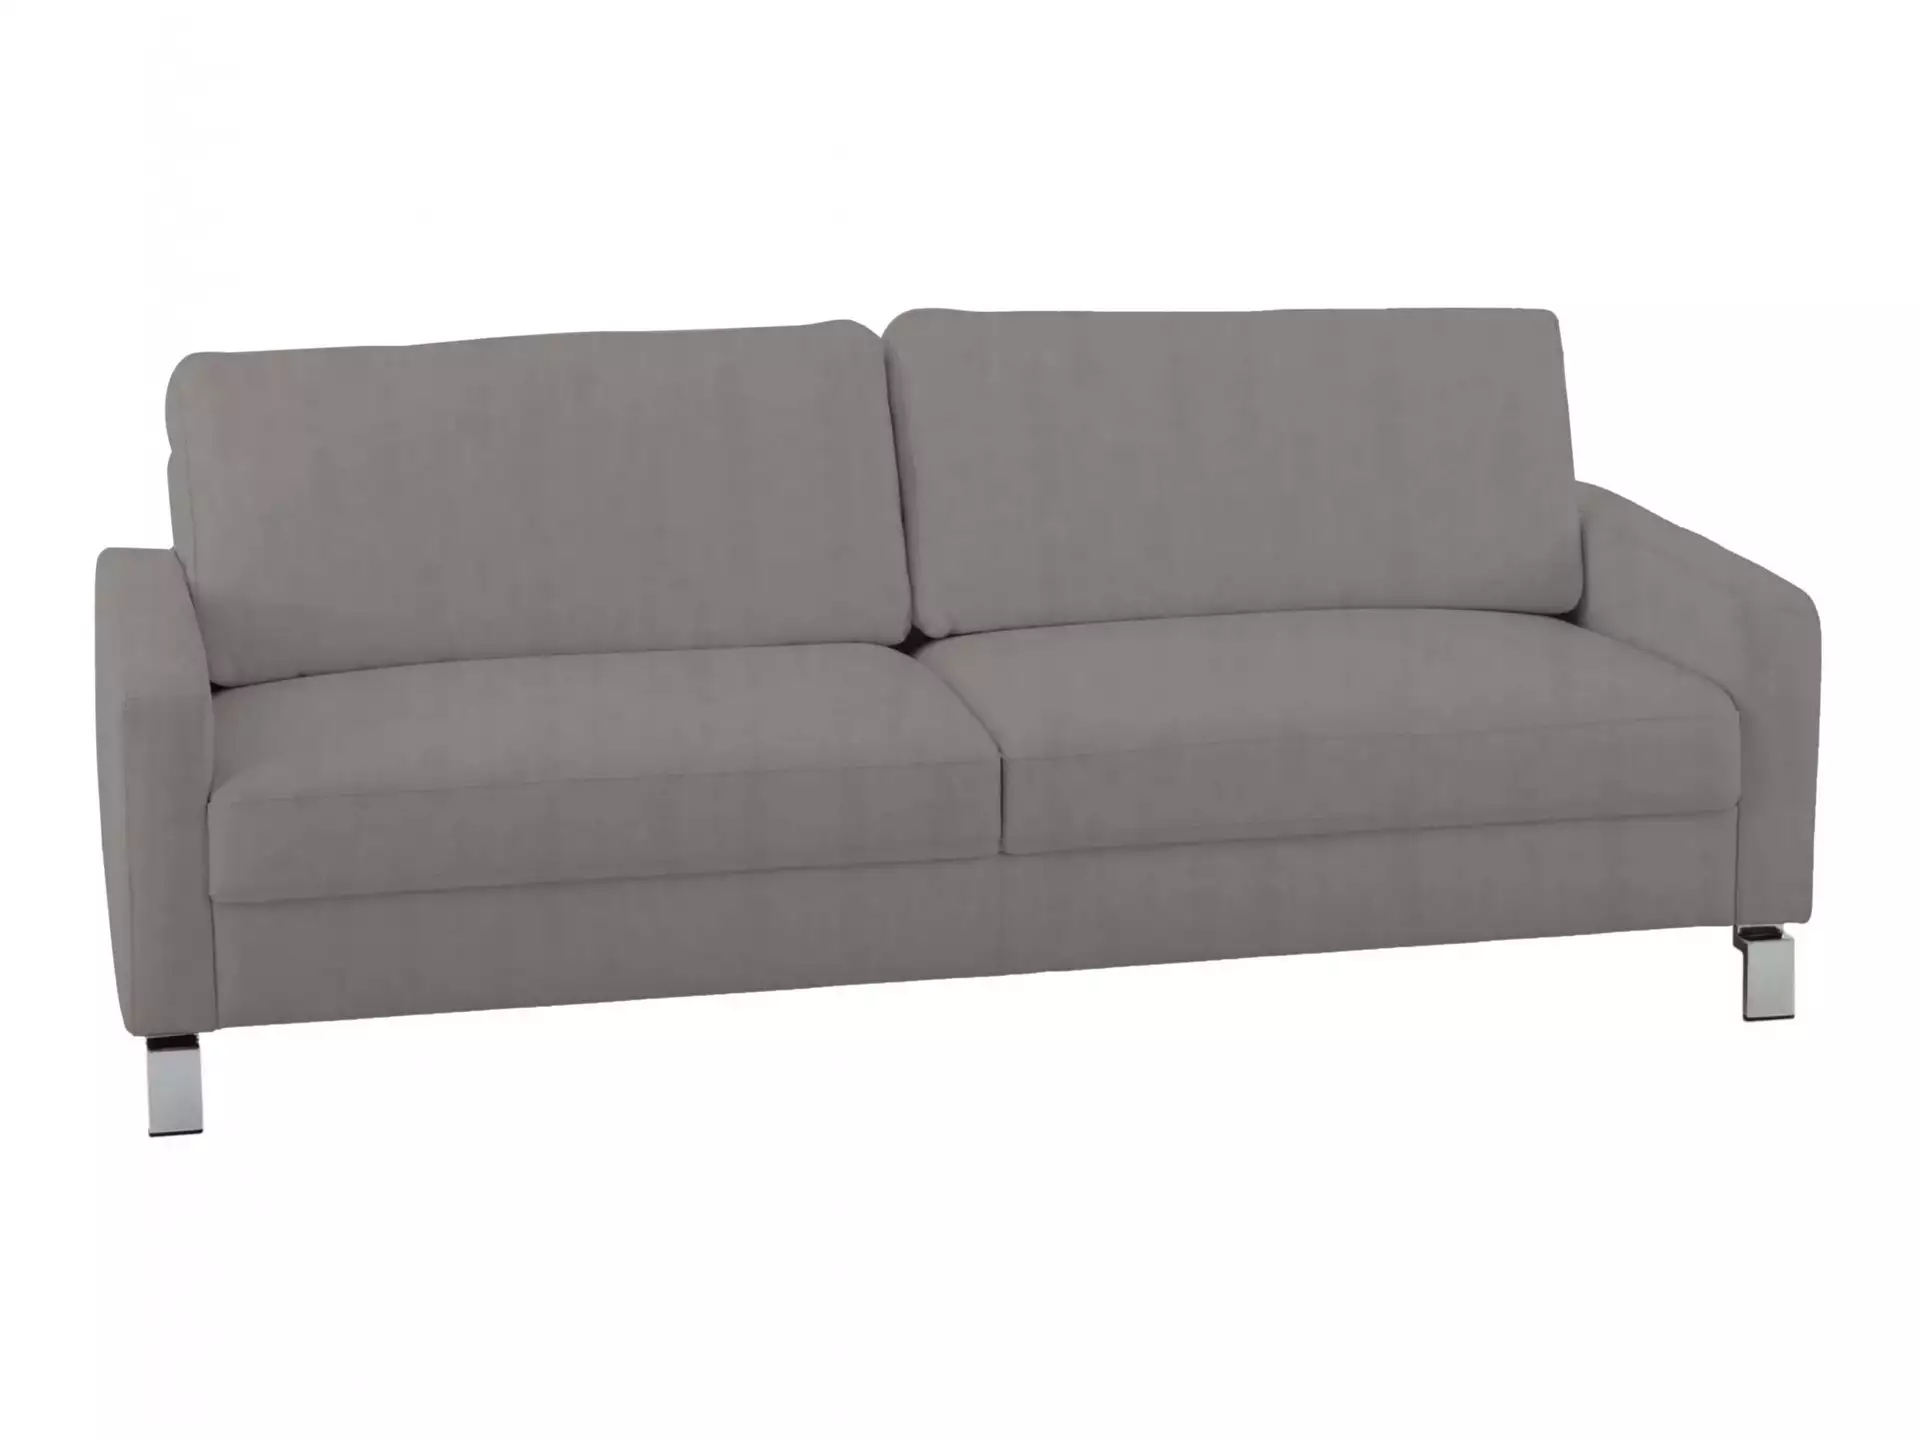 Sofa Interims Basic B: 204 cm Candy / Farbe: Stone / Material: Stoff Basic